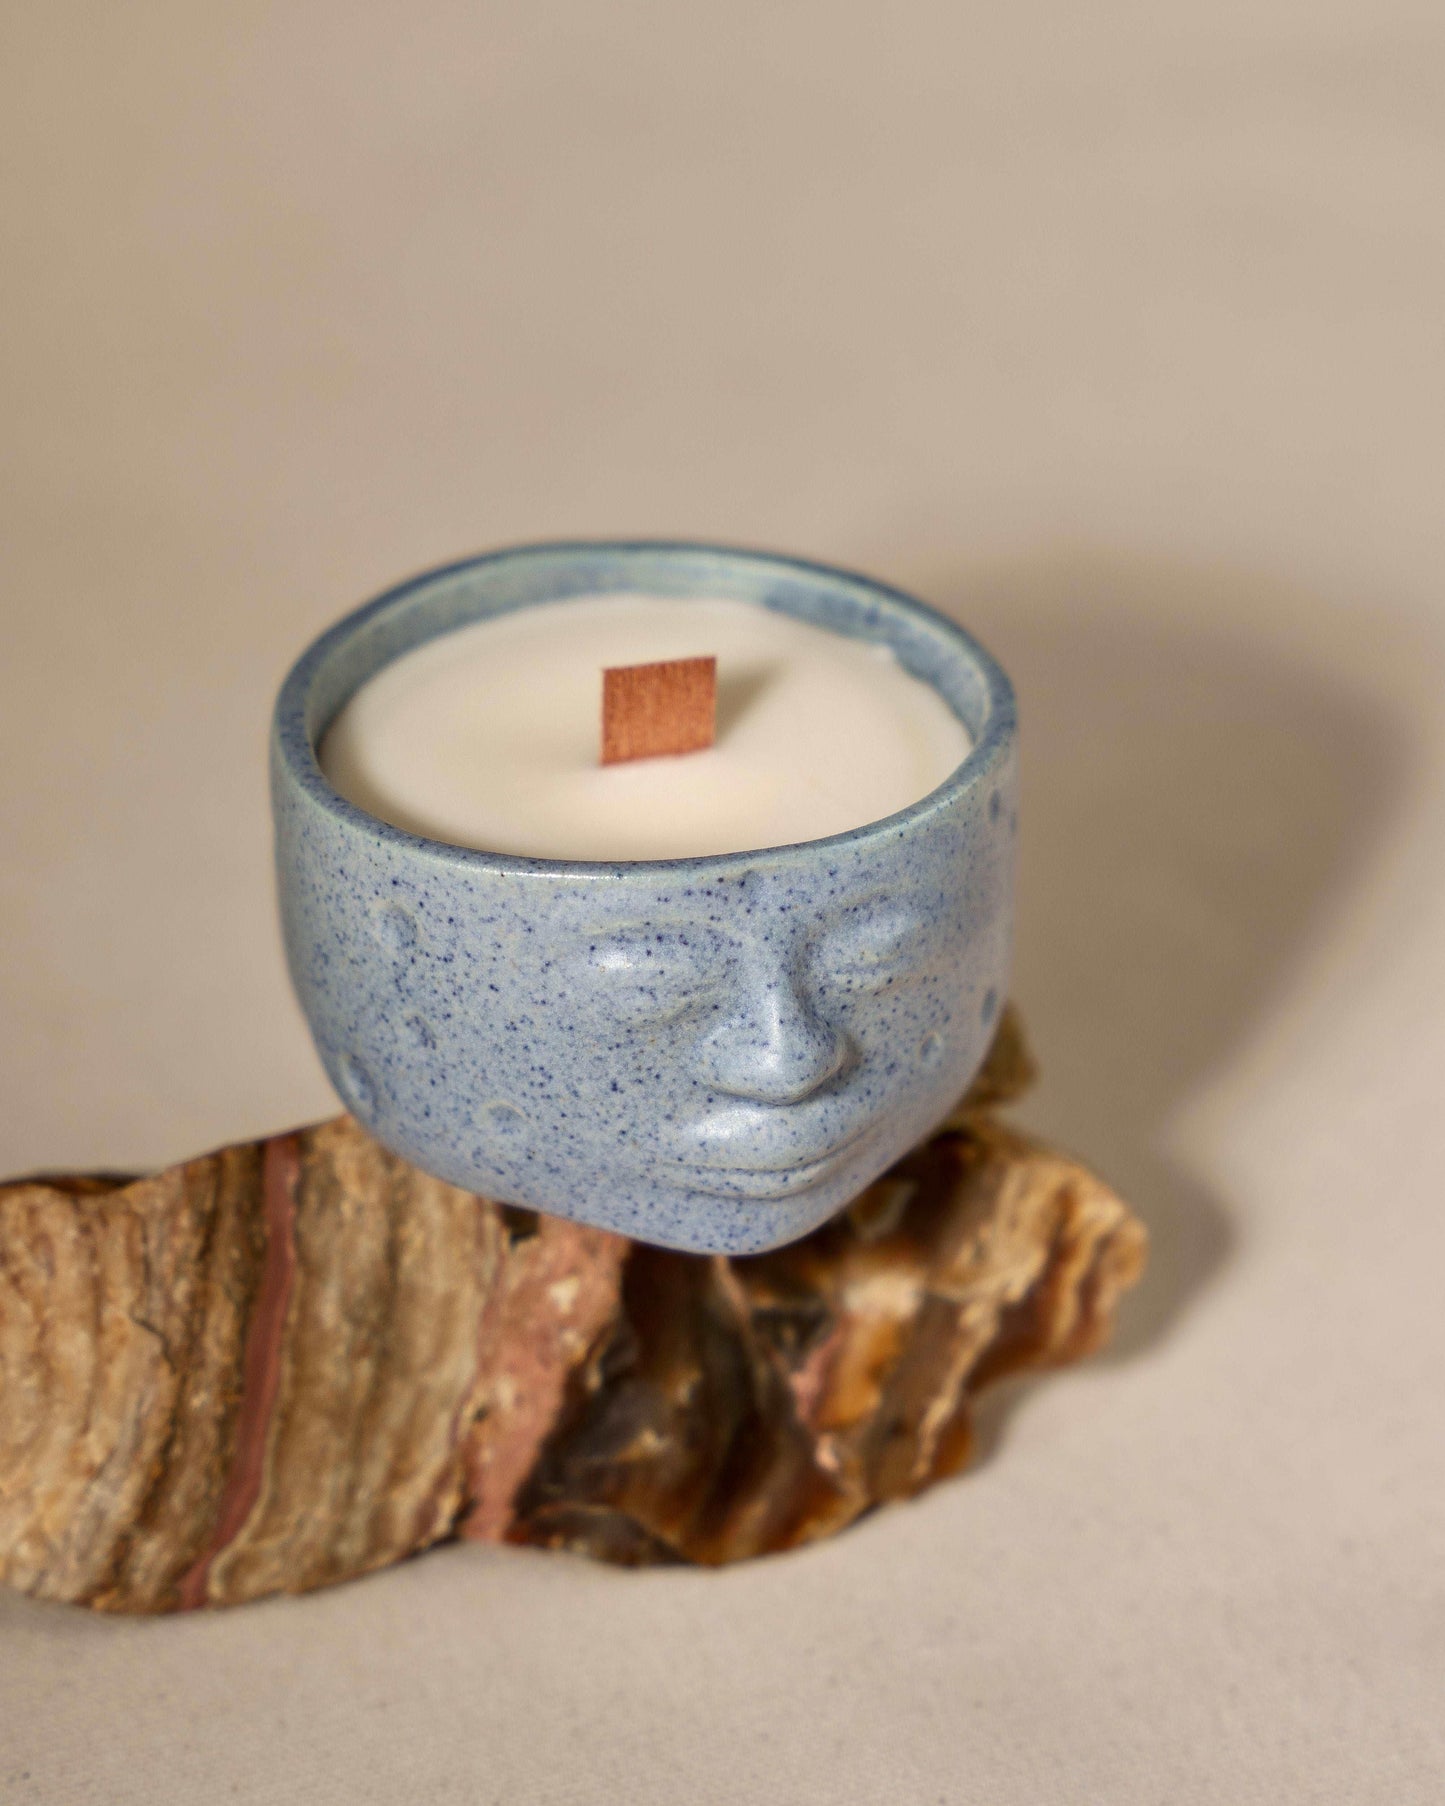 Oberon Moon Face Ceramic Jar Candle in Lavender colour